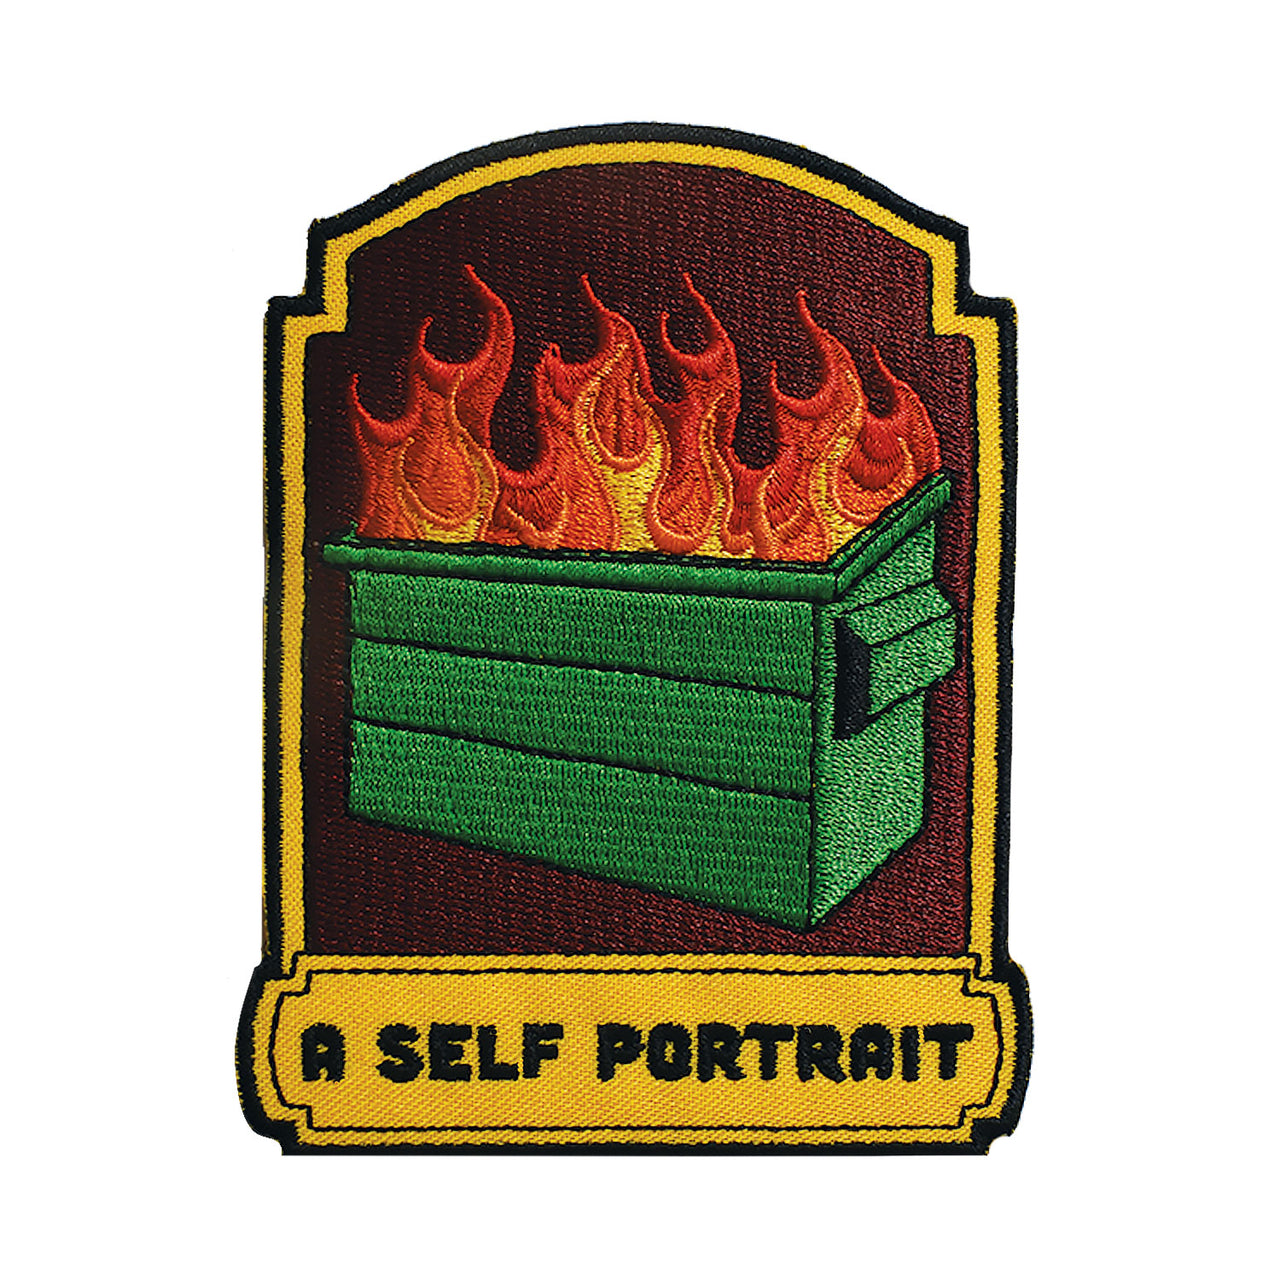 A Self Portrait (Iron-On Patch)